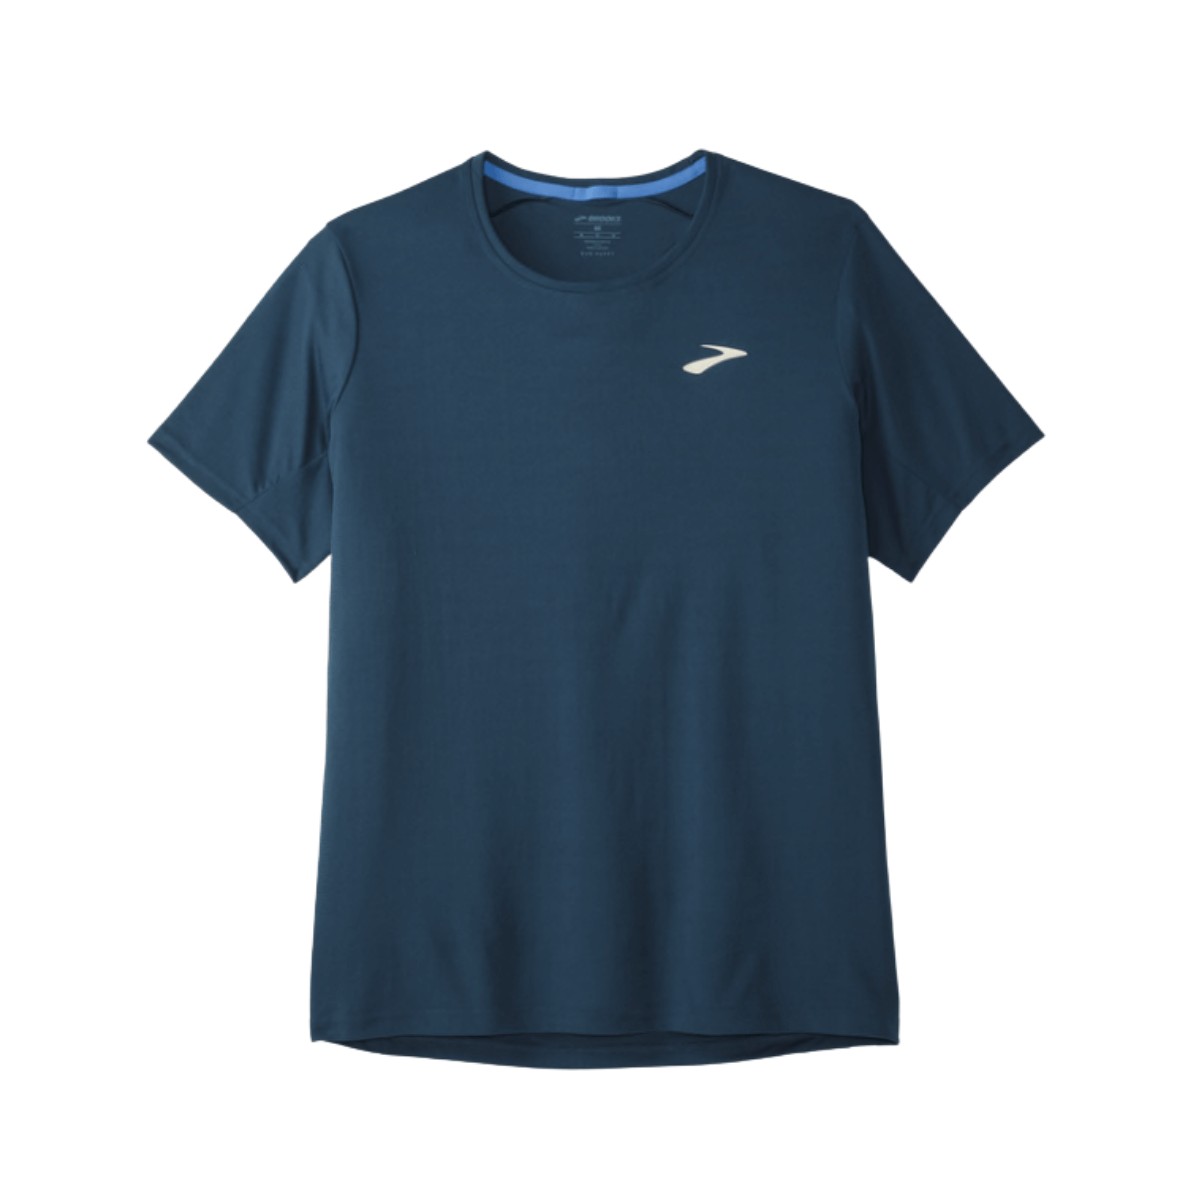 Camiseta Brooks Atmosphere Manga Corta Azul Marino, Talla S